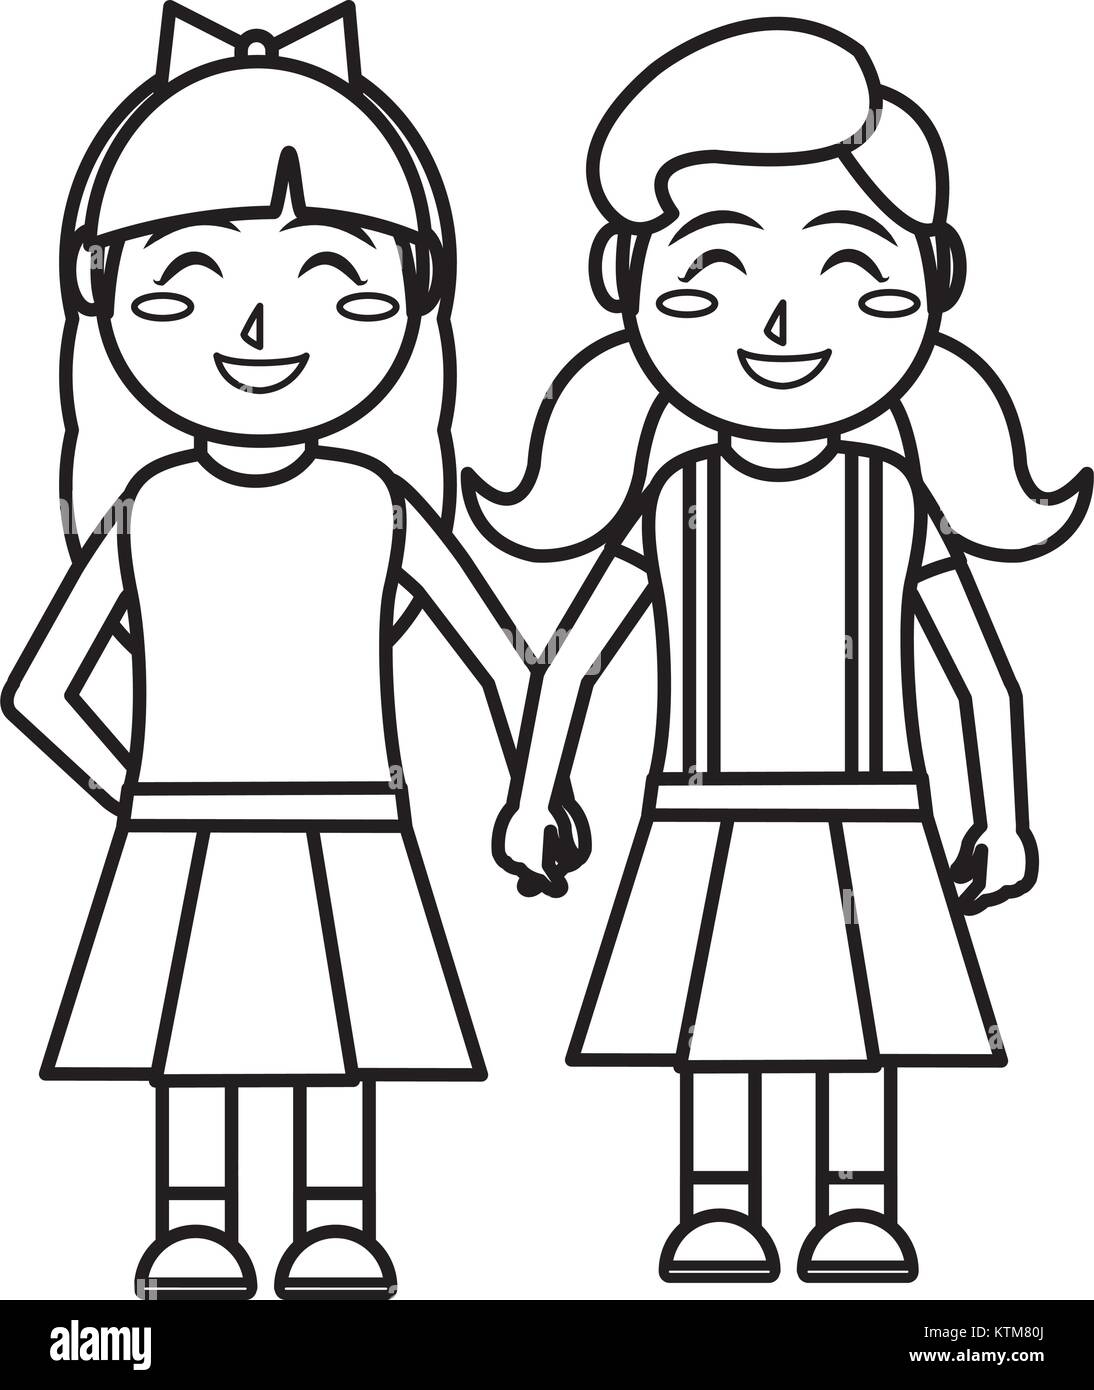 Girls cartoons design Stock Vector Image & Art - Alamy